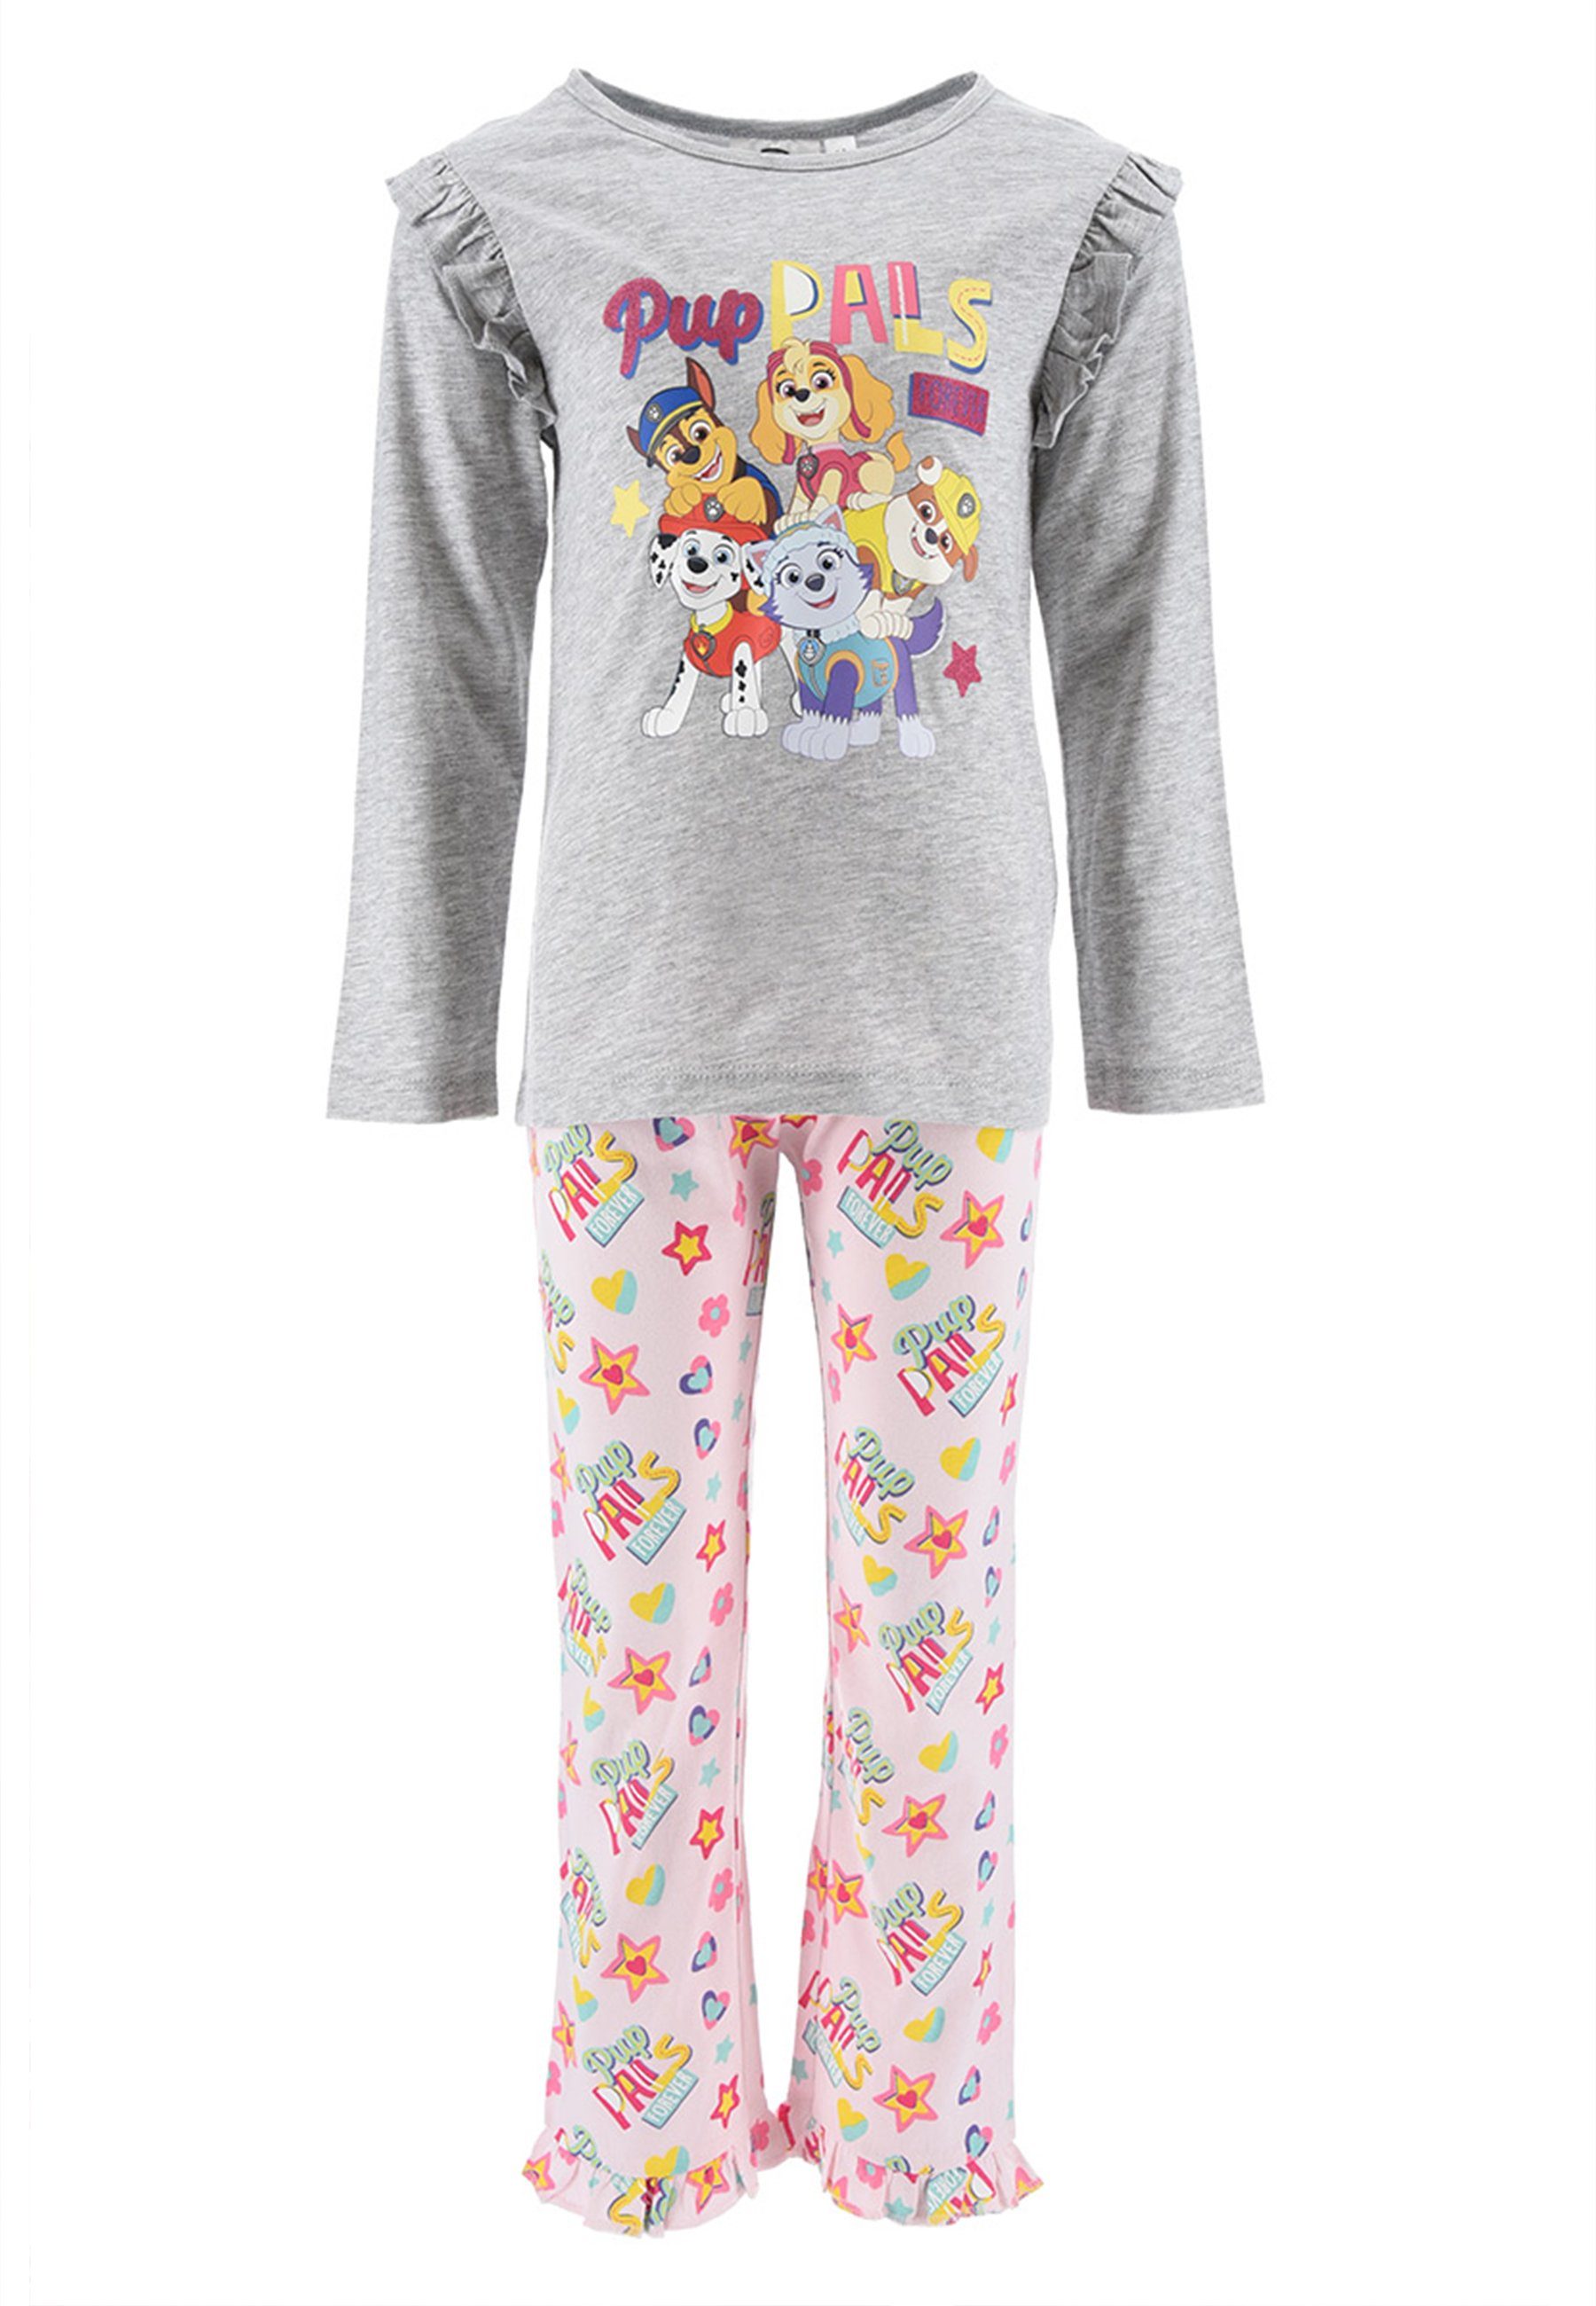 PAW PATROL Schlafanzug Skye Kinder Mädchen Pyjama langarm Nachtwäsche (2 tlg) Grau